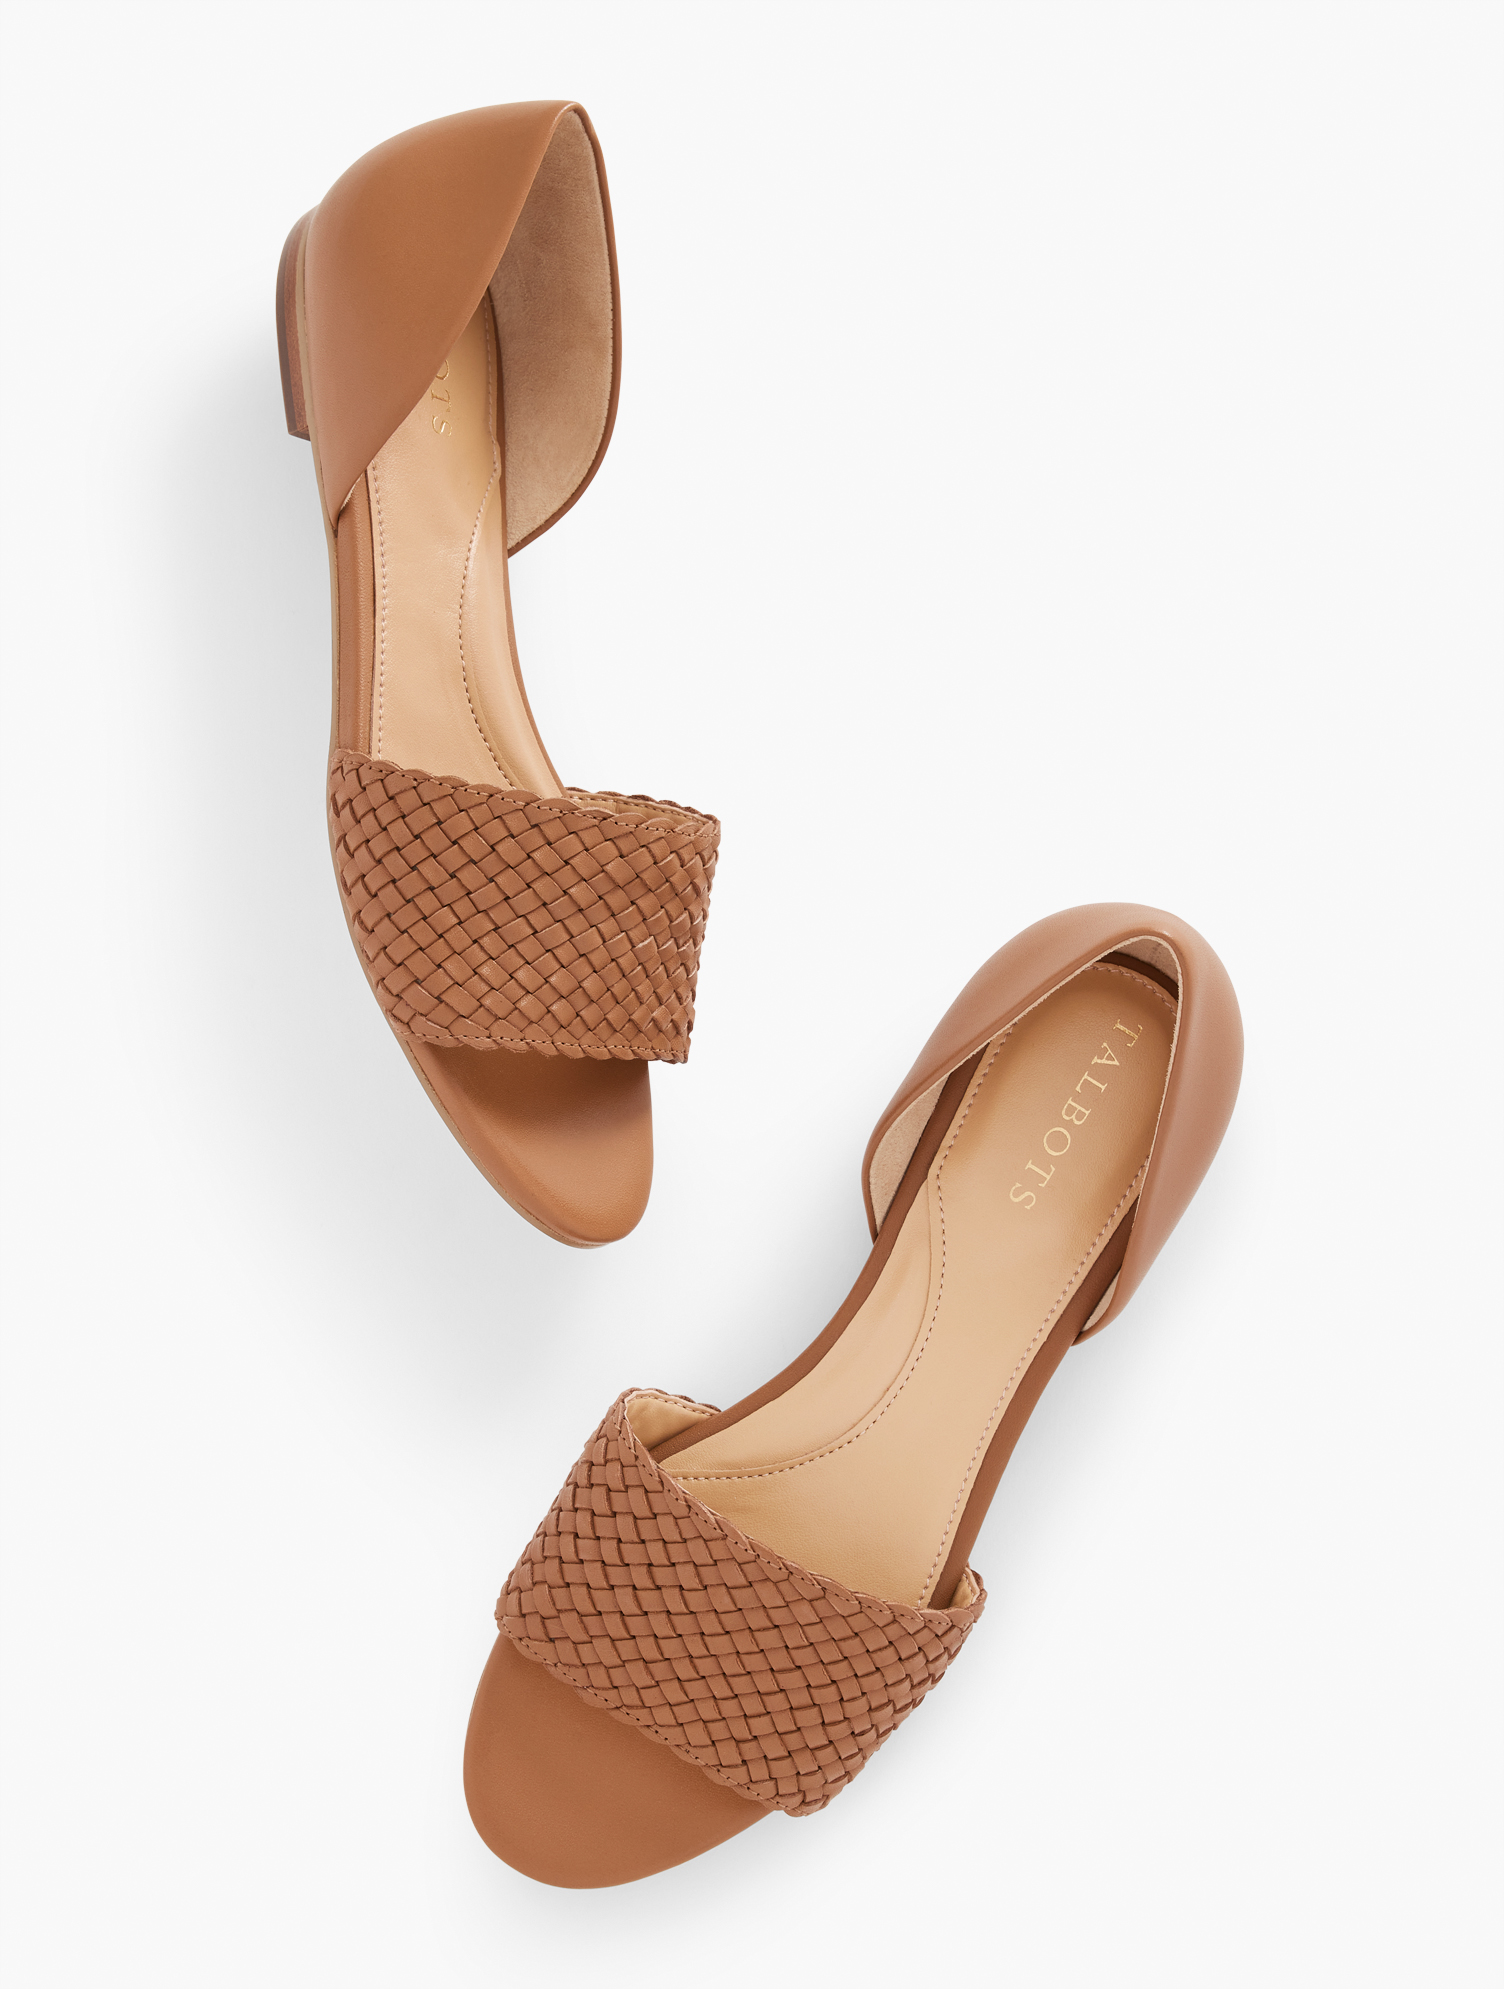 Talbots Leona Woven Leather Sandals - Havana Tan - 10m